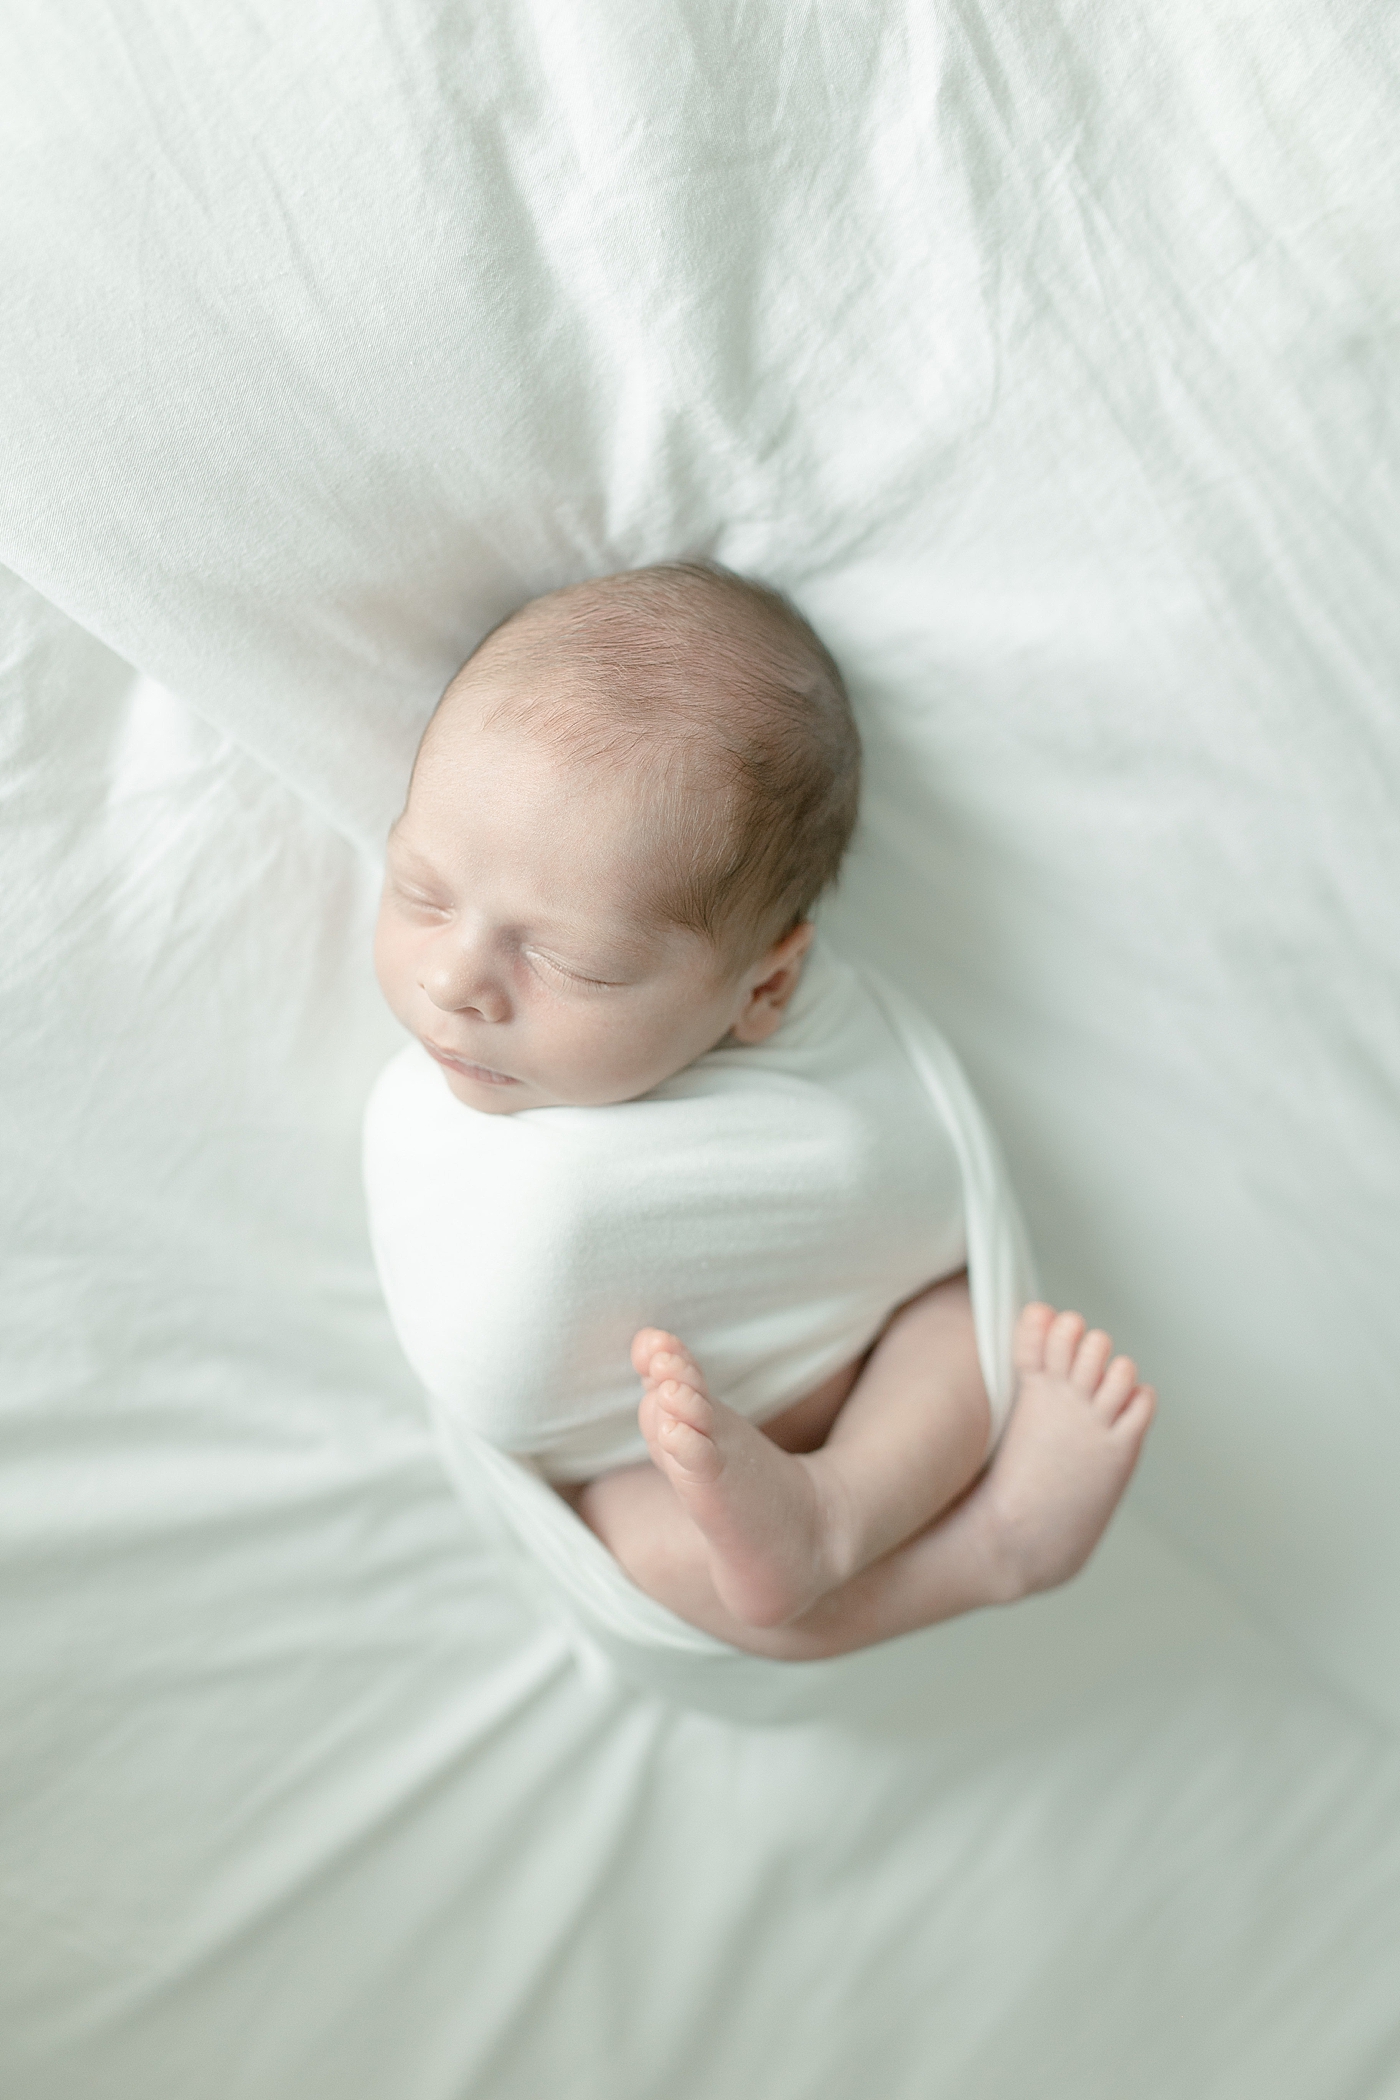 Newborn sleeping baby wrapped in a white swaddle | Photo by Biloxi MS newborn photographer Little Sunshine Photography